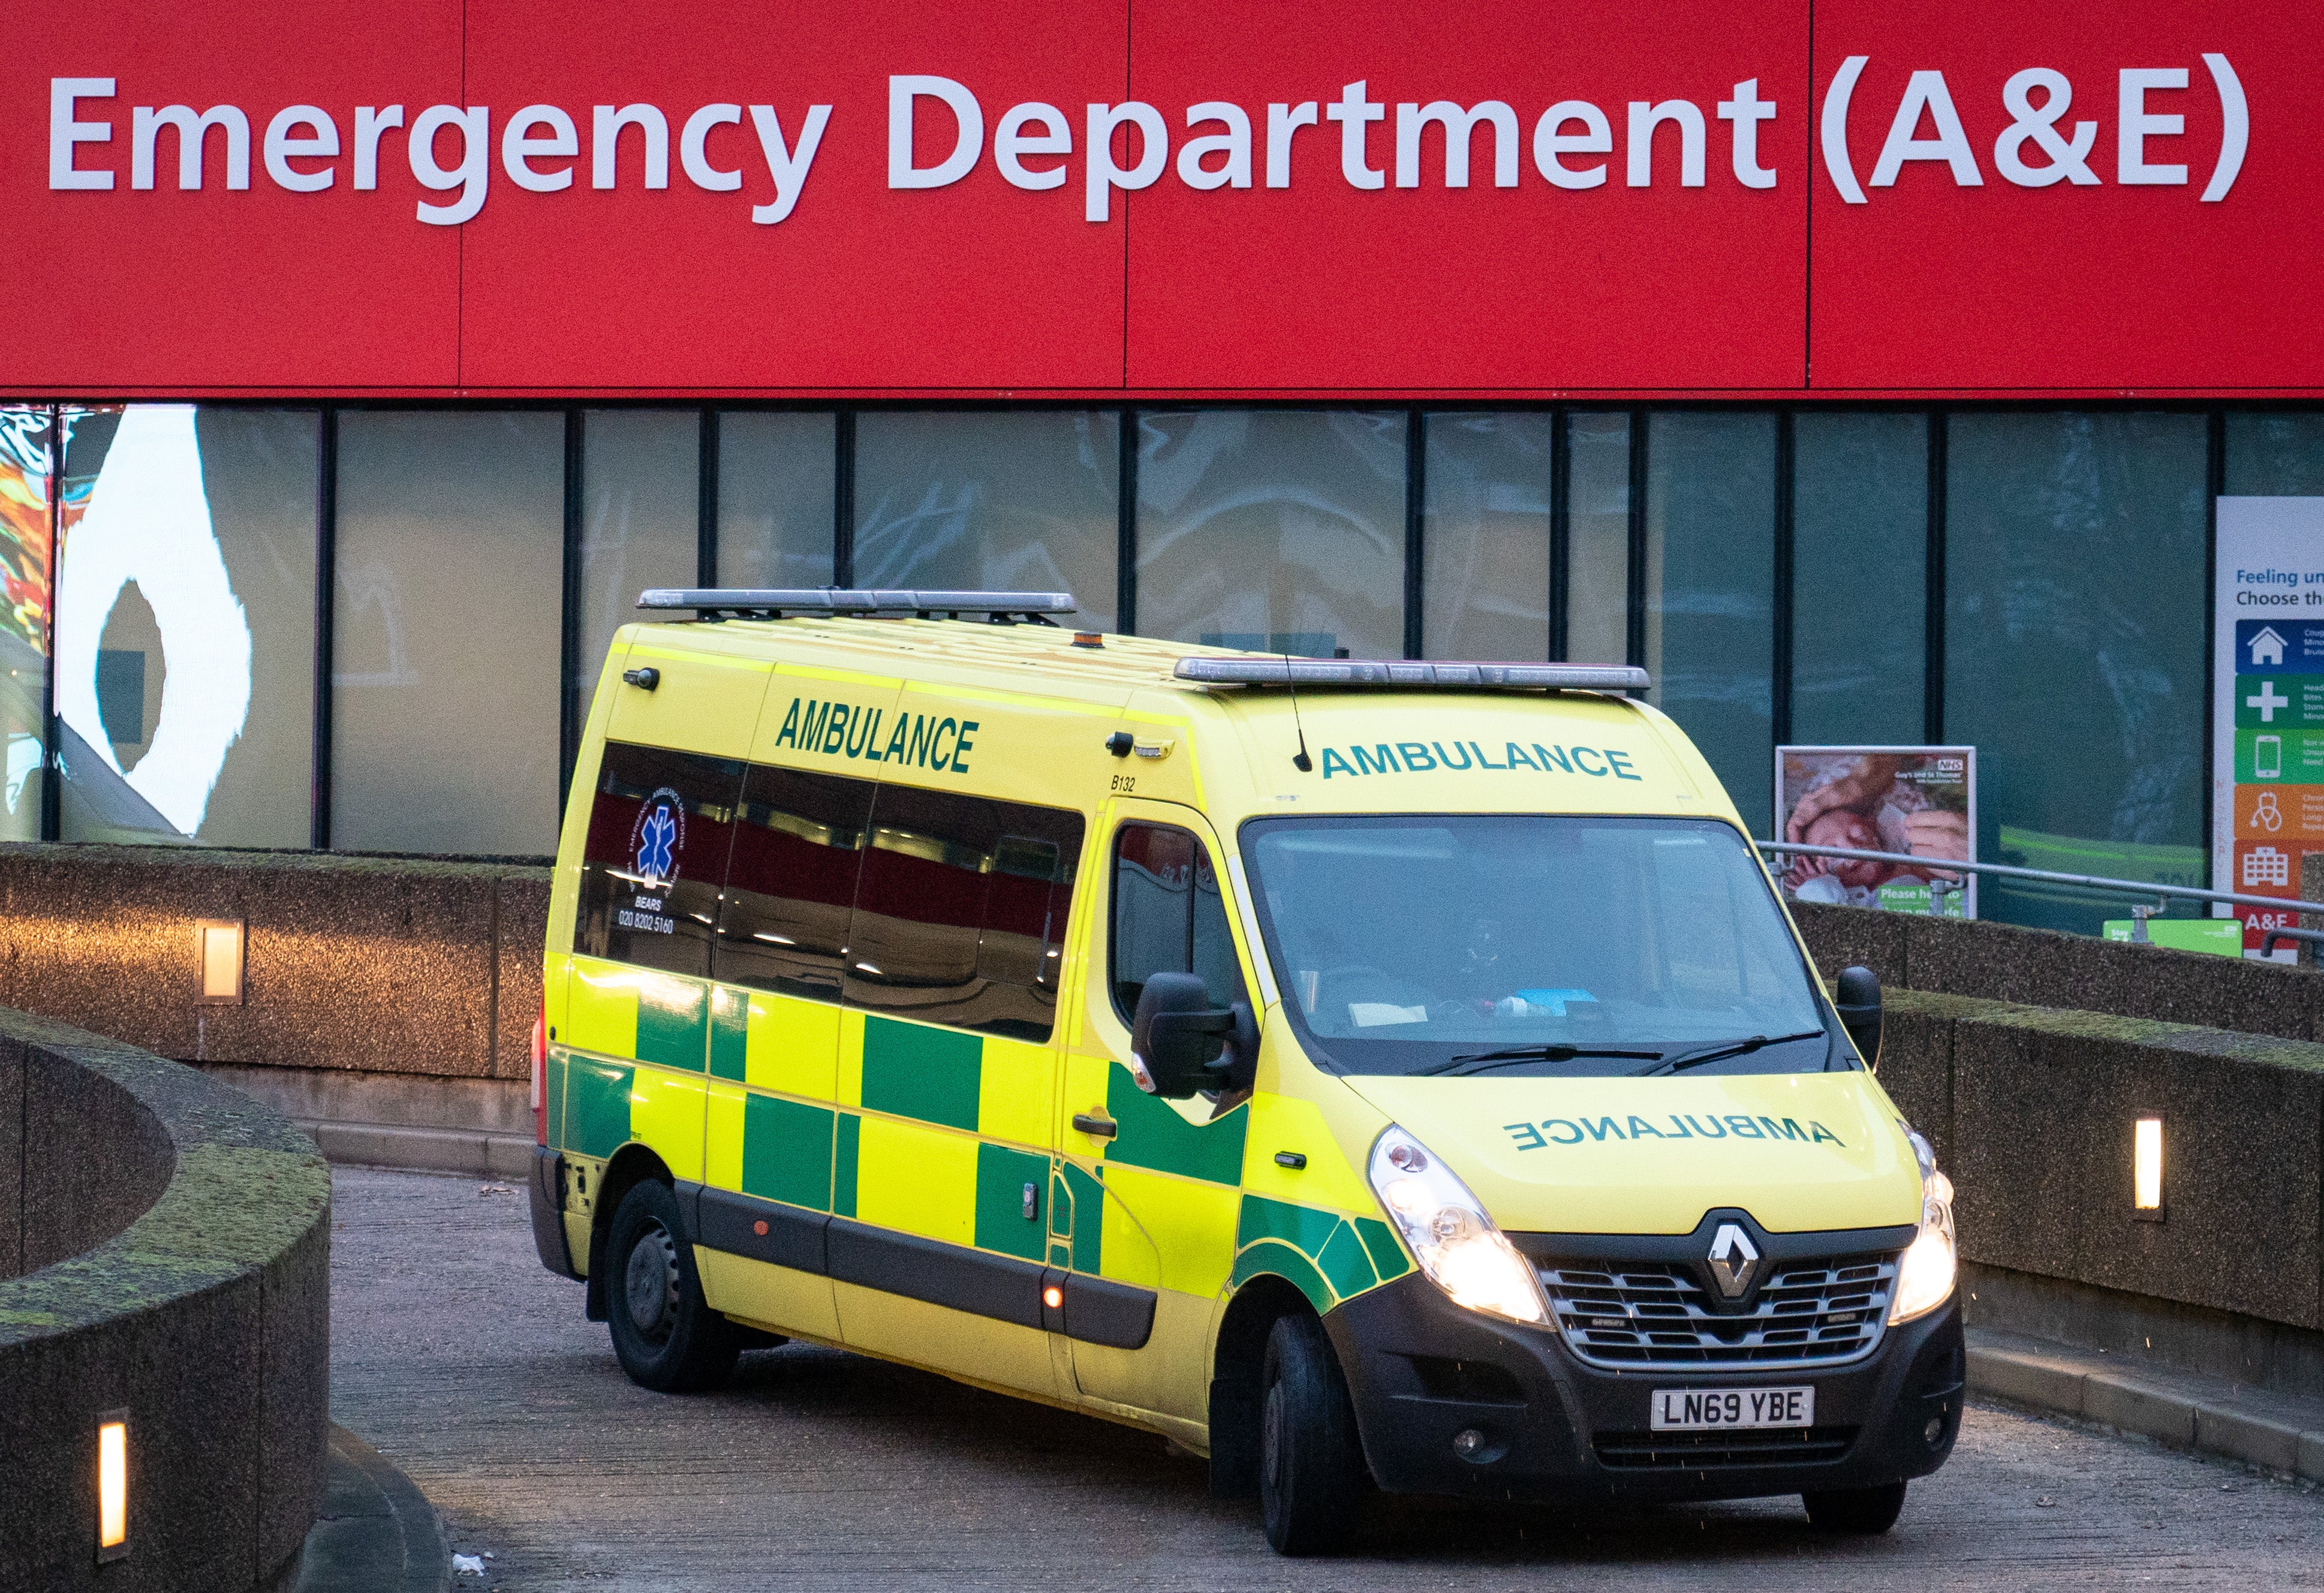 Paramedics lacked vital treatments as they responded to emergencies